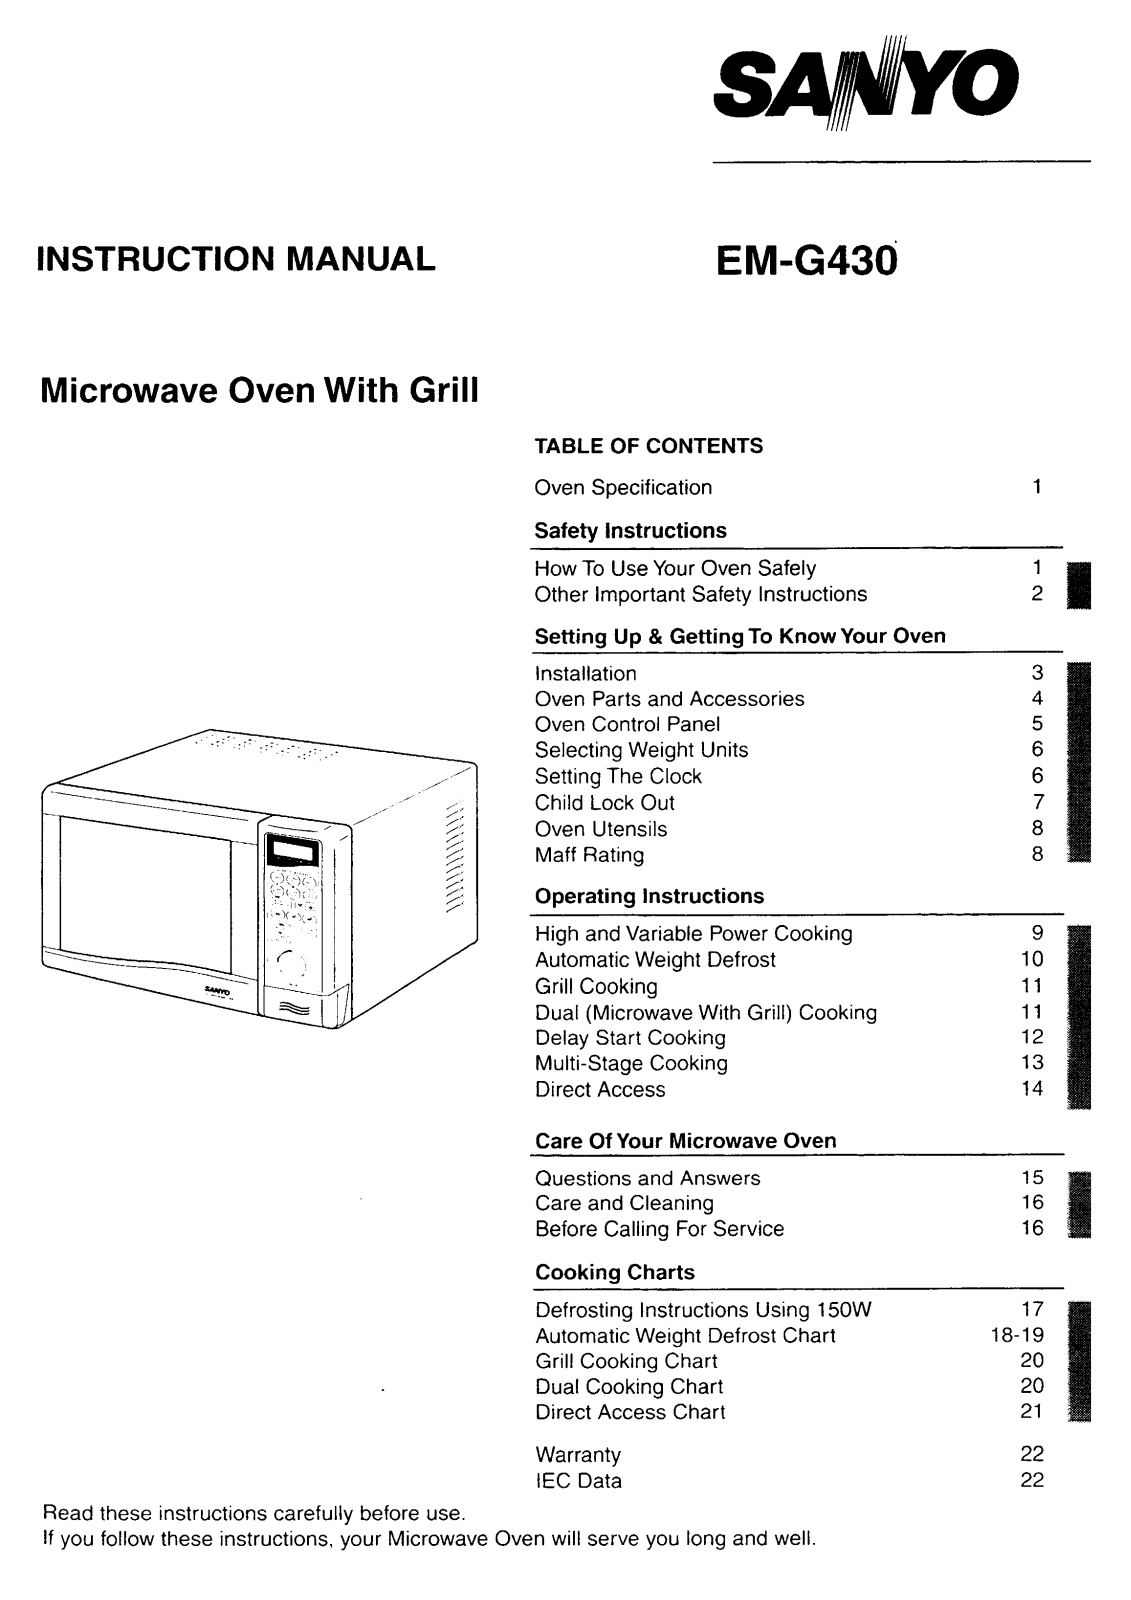 Sanyo EM-G430 User Manual